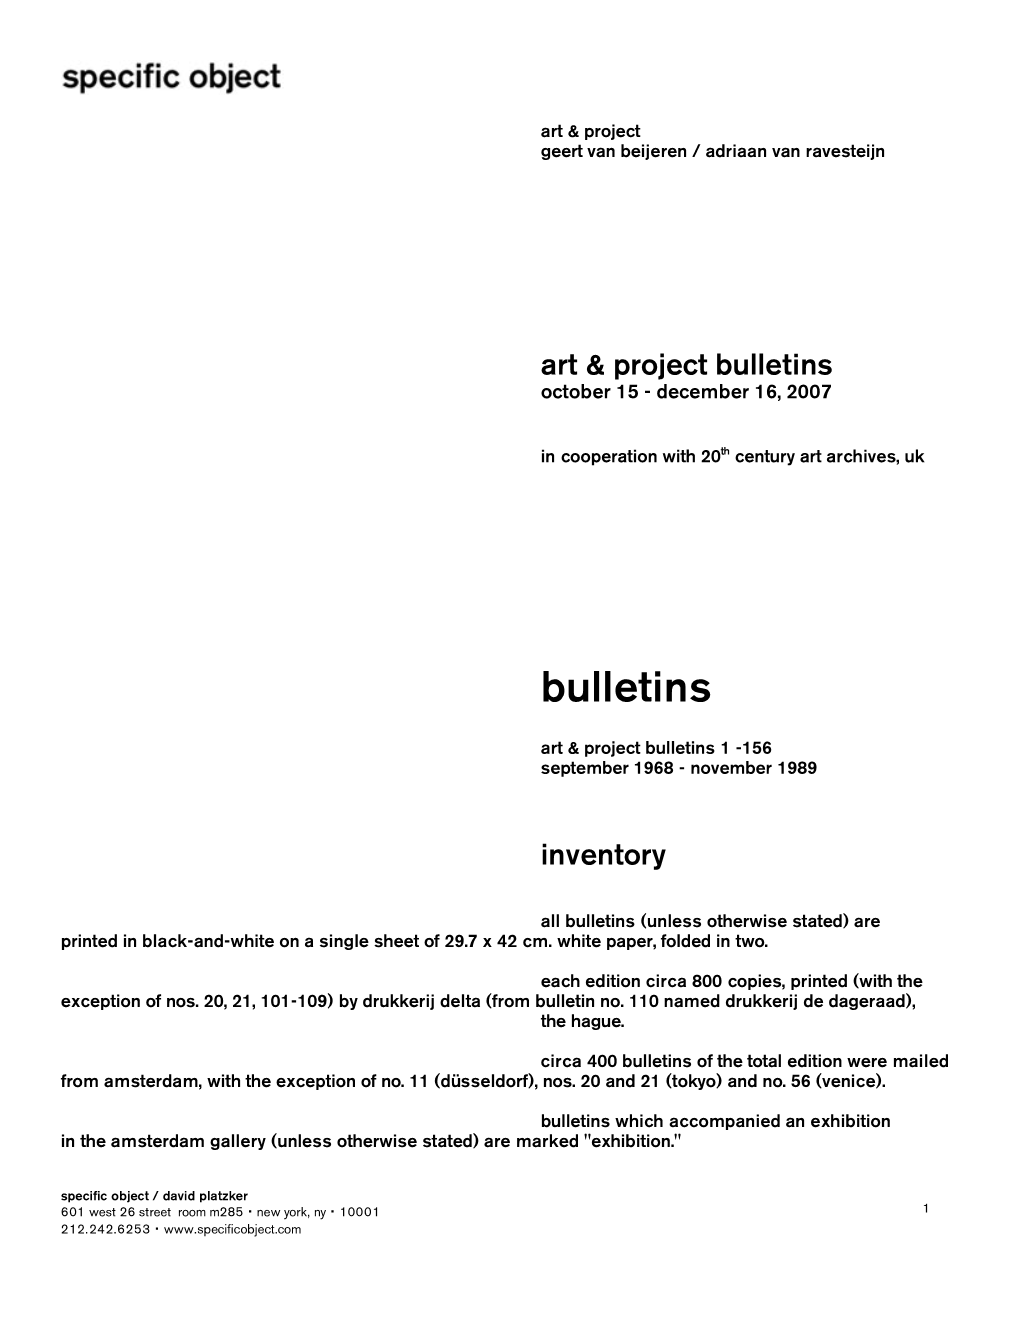 Art & Project Bulletins